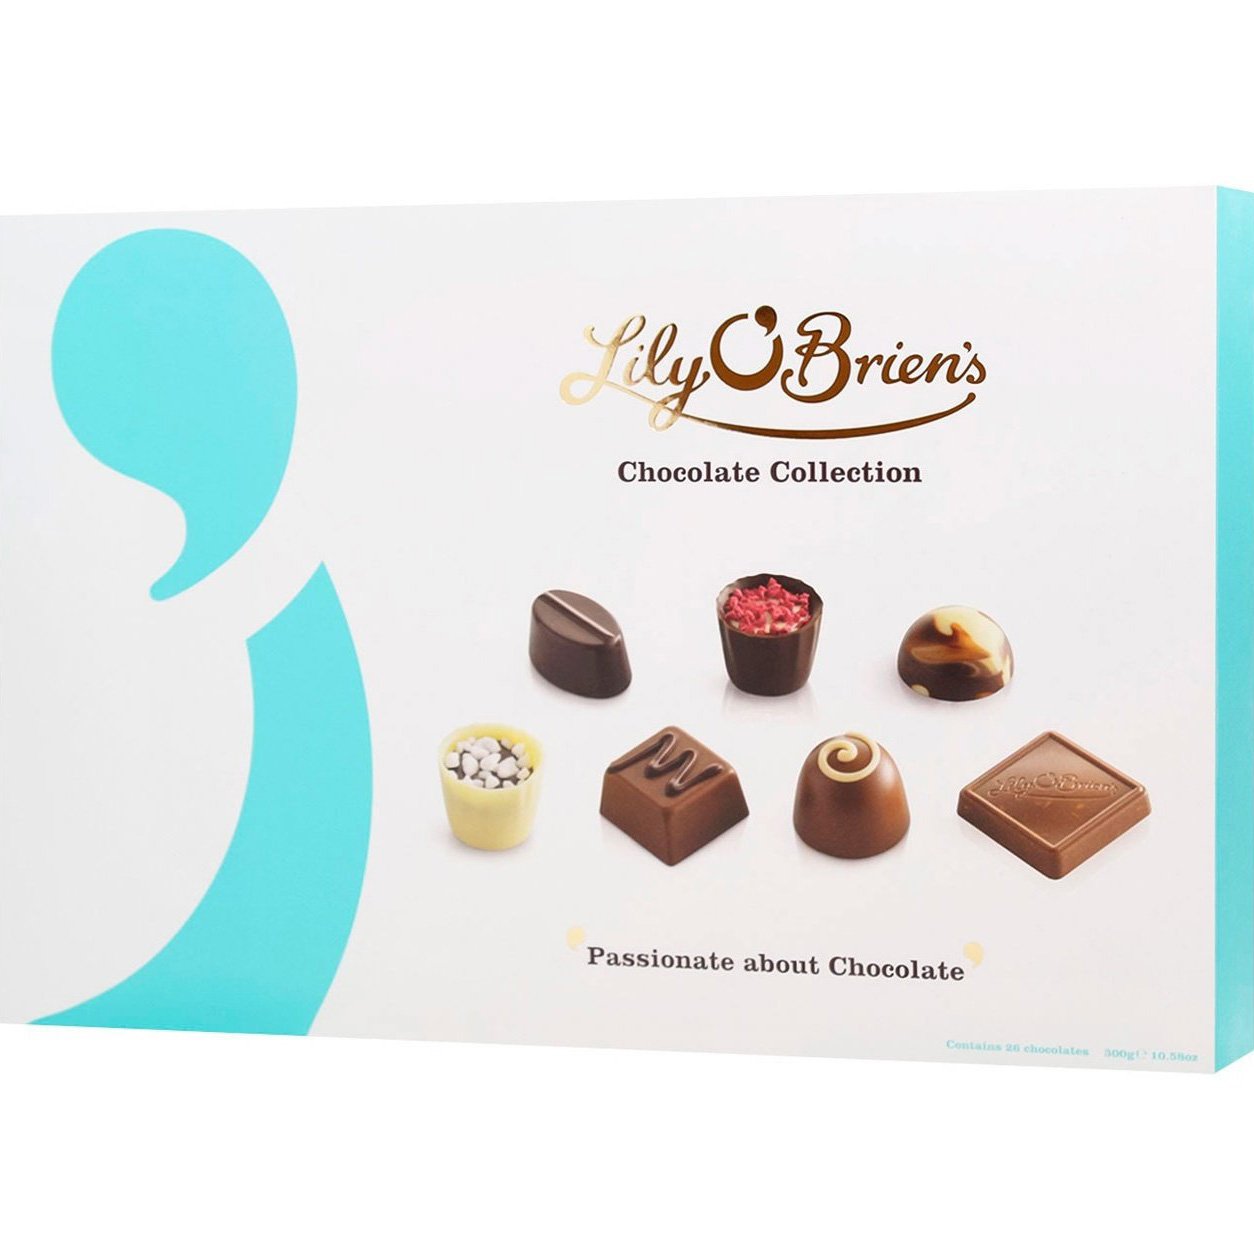 Цукерки шоколадні Lily O'brien's Desserts Collection 300 г - фото 1